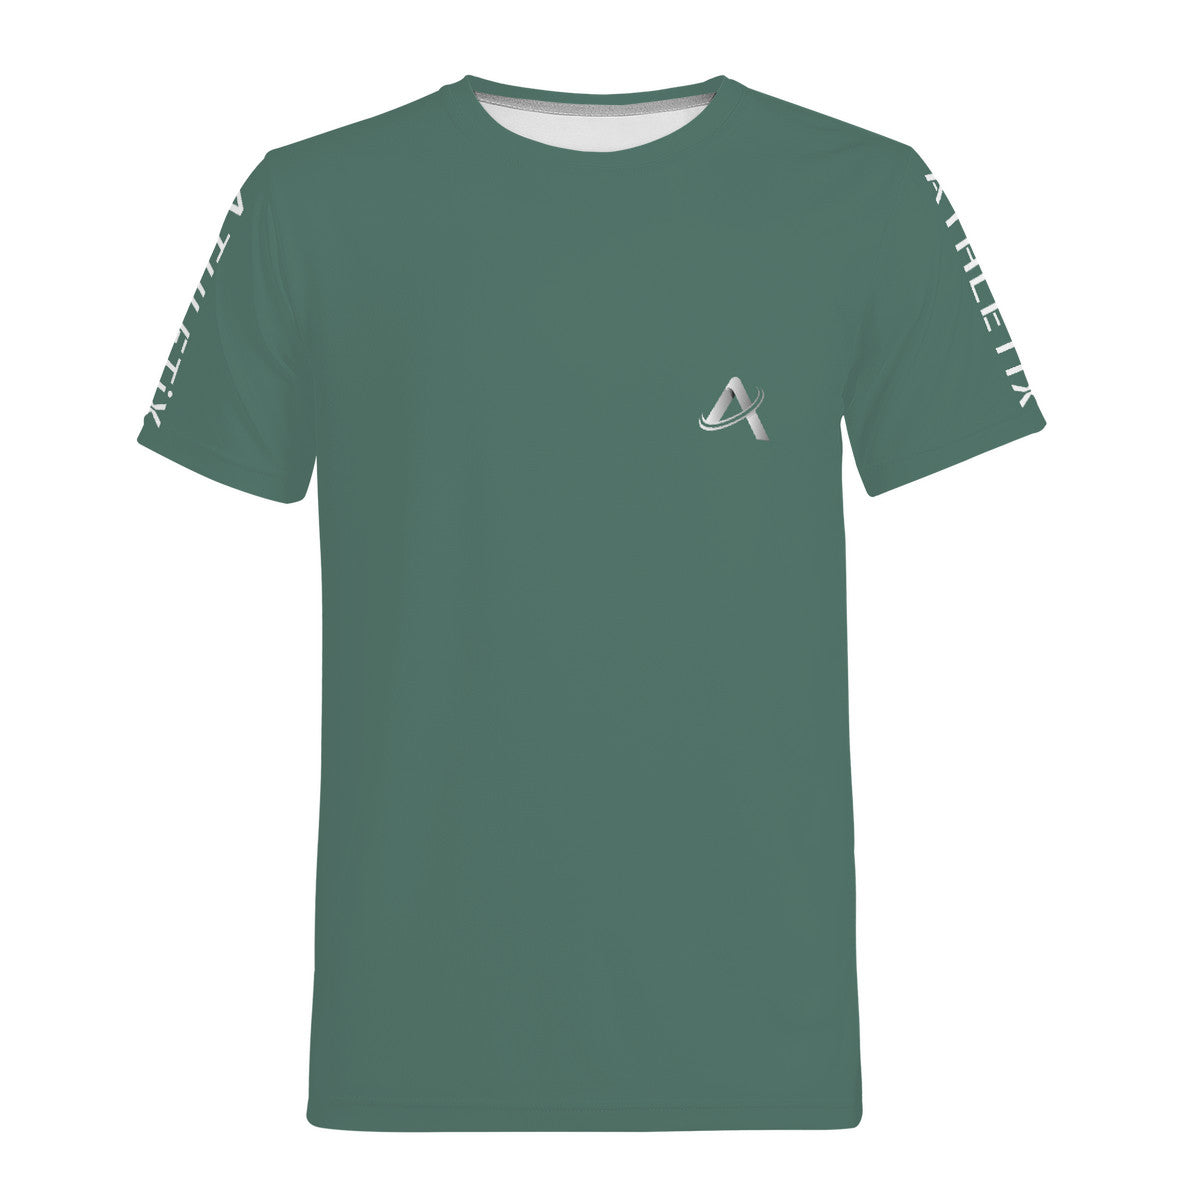 ATHLETiX Performance T-Shirt